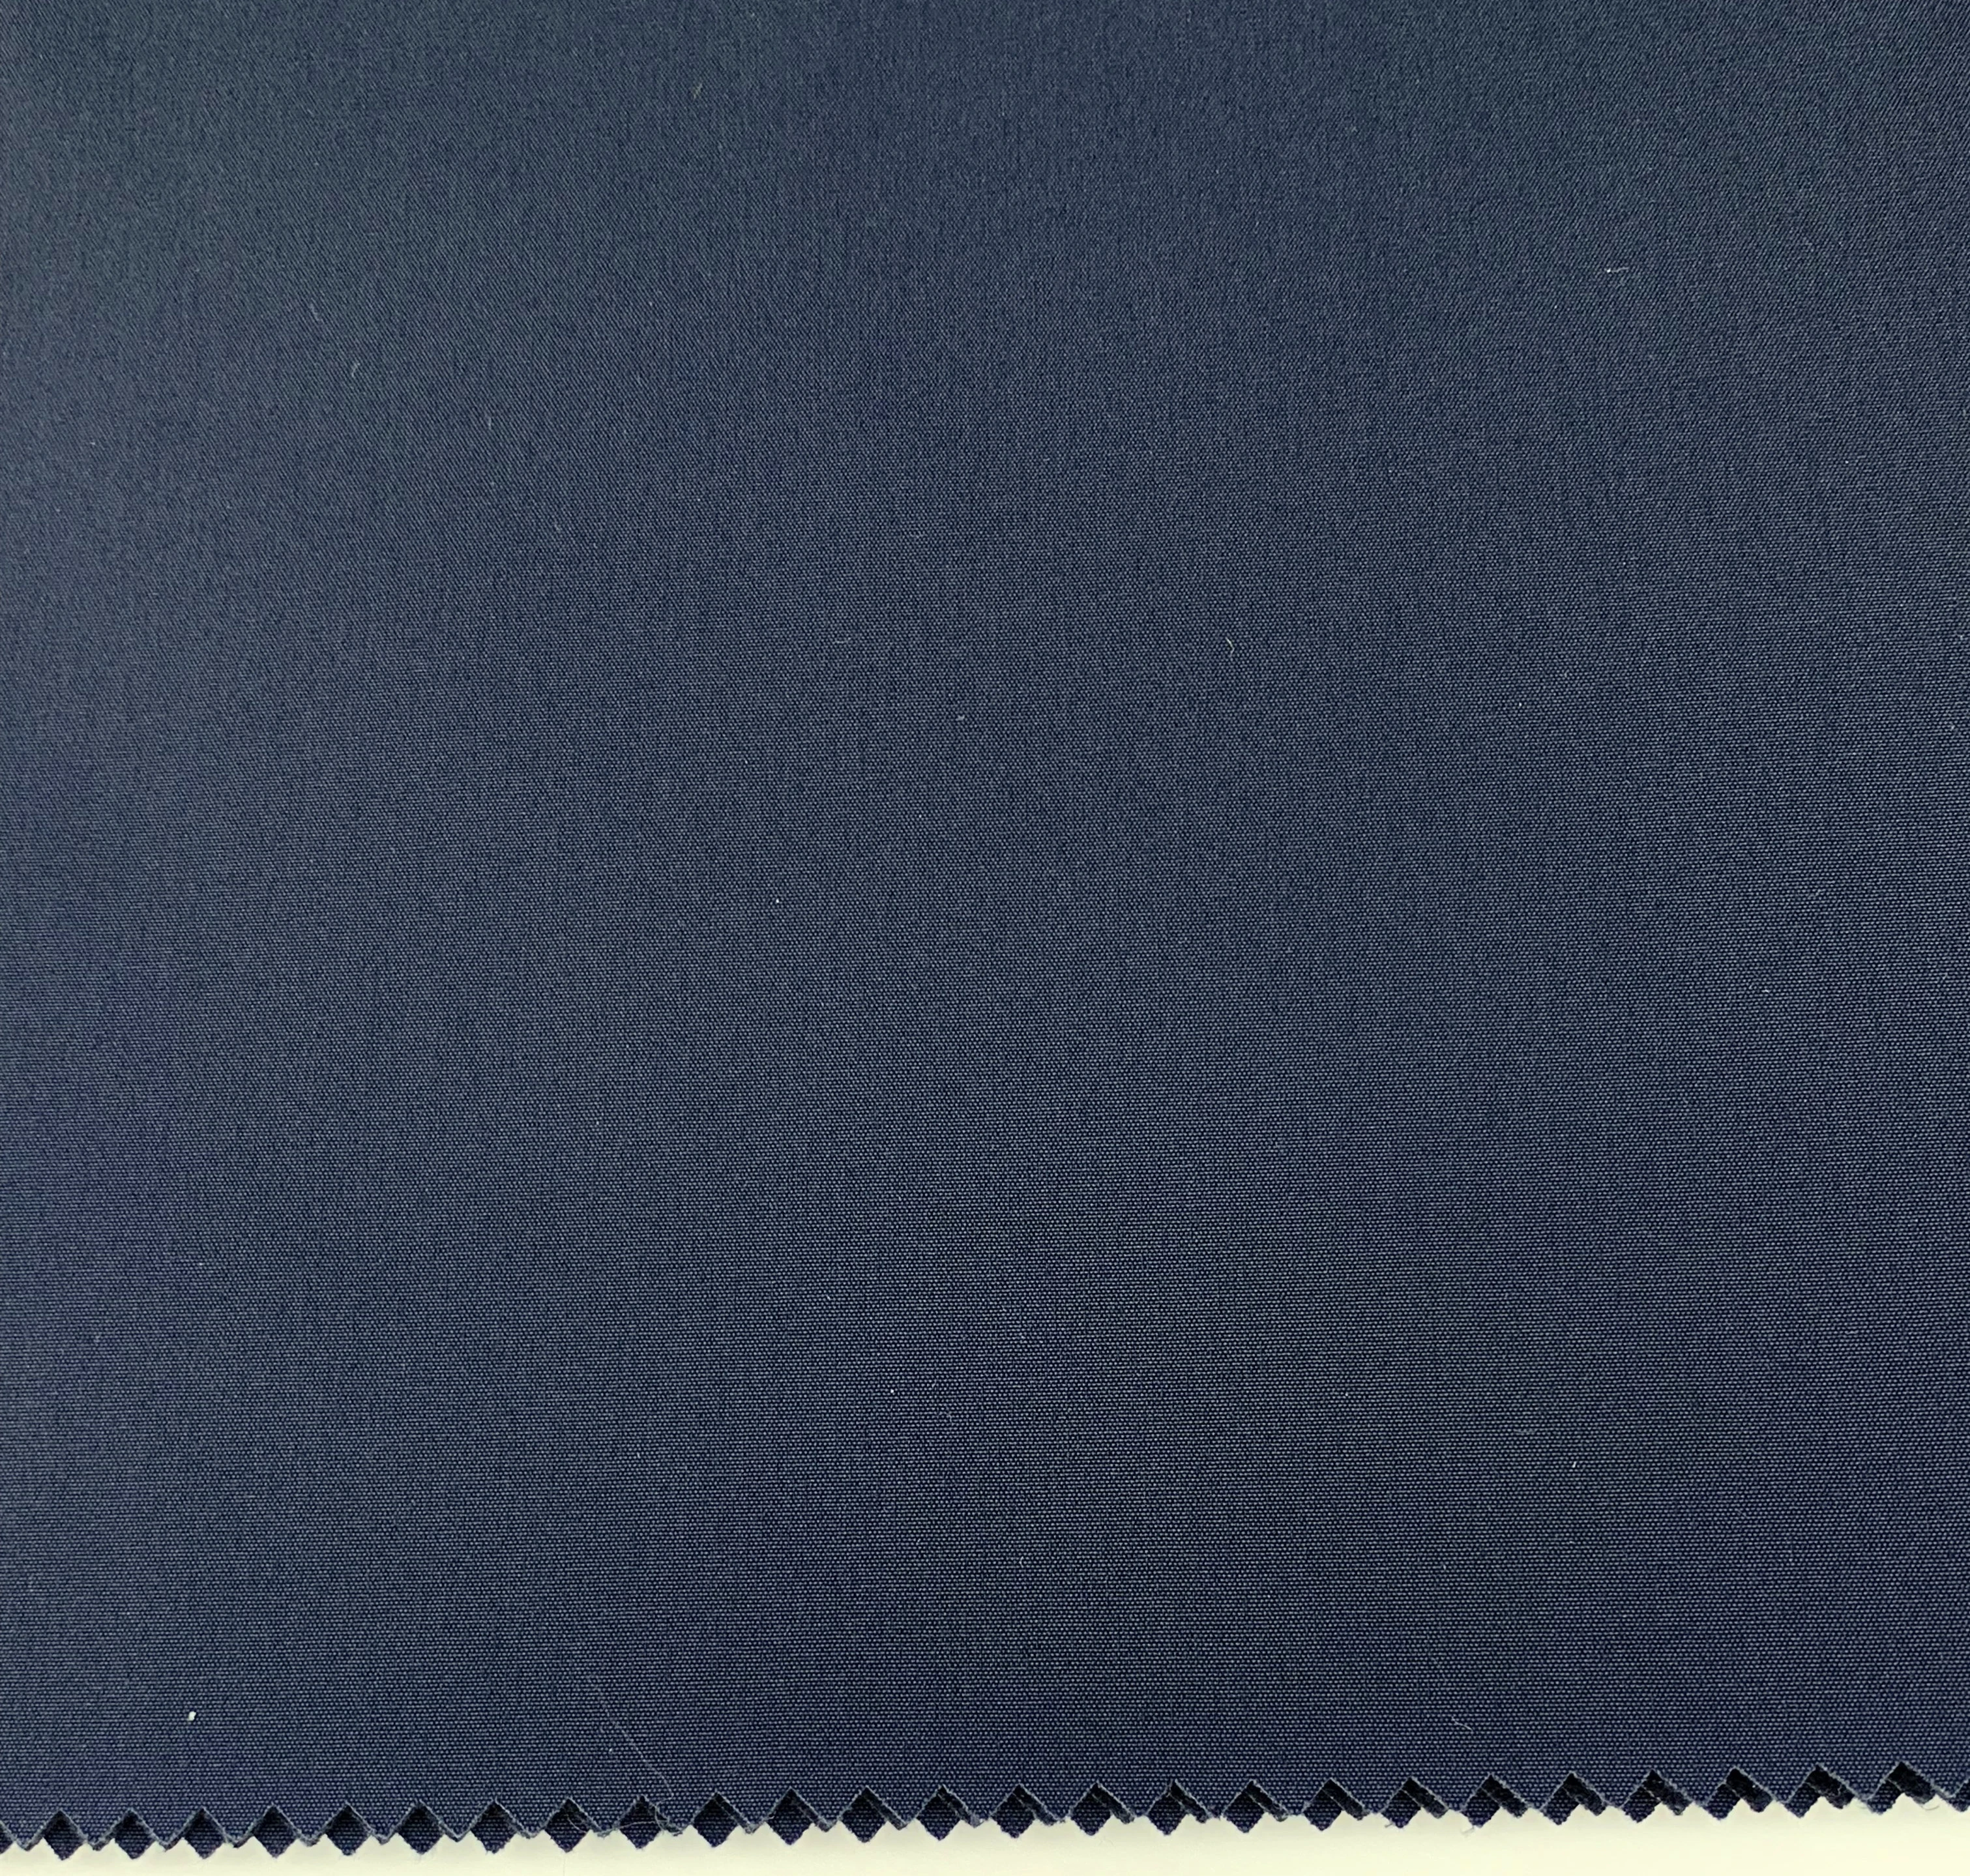 90D Weft Stretch Spandex Nylon 2 Way Stretch bonded with silk flannelette Taslon Fabric for Jacket